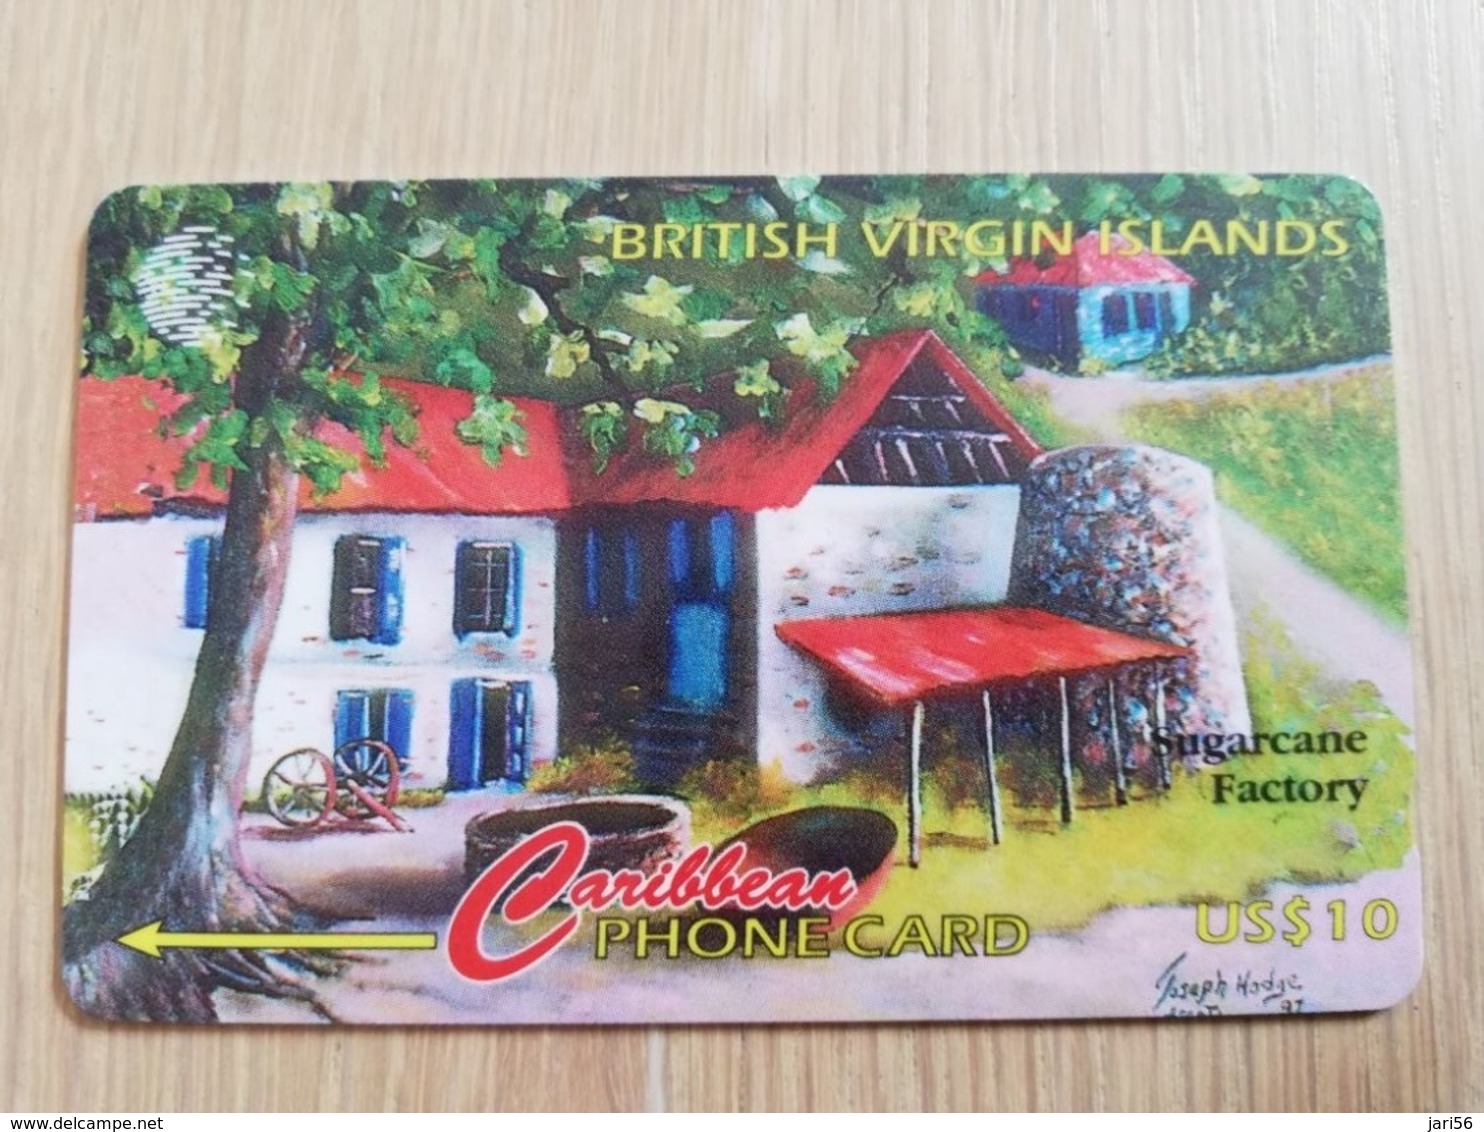 BRITSCH VIRGIN ISLANDS  US$ 10  BVI-193H   SUGARCANE FACTORY   193CBVH     Fine Used Card   ** 2690** - Virgin Islands